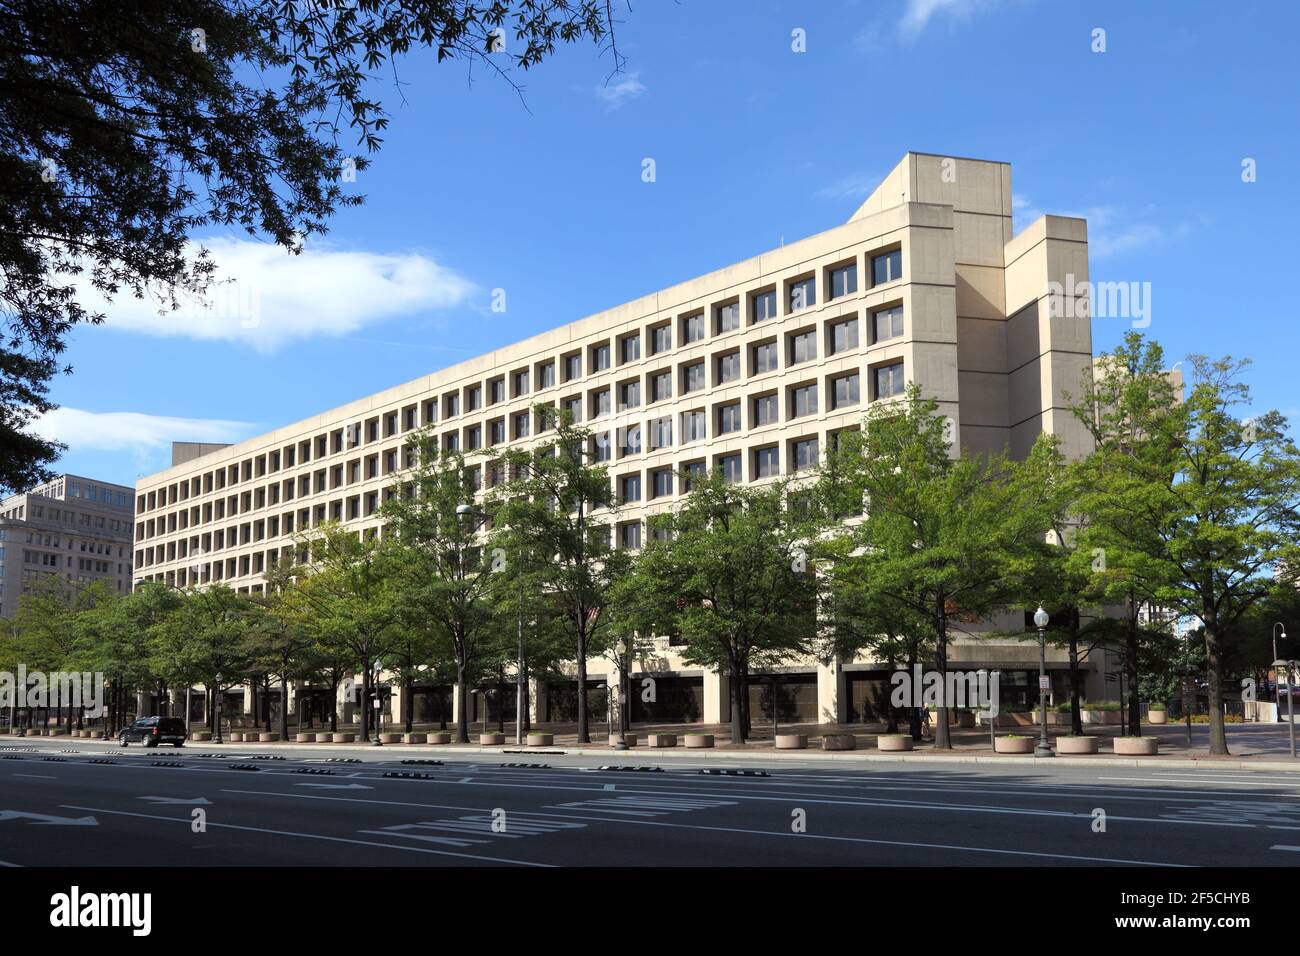 Geografia/viaggio, USA, Washington D.C., Washington, J. Edgar Hoover Building des FBI, Washington D.C., Additional-Rights-Clearance-Info-Not-Available Foto Stock